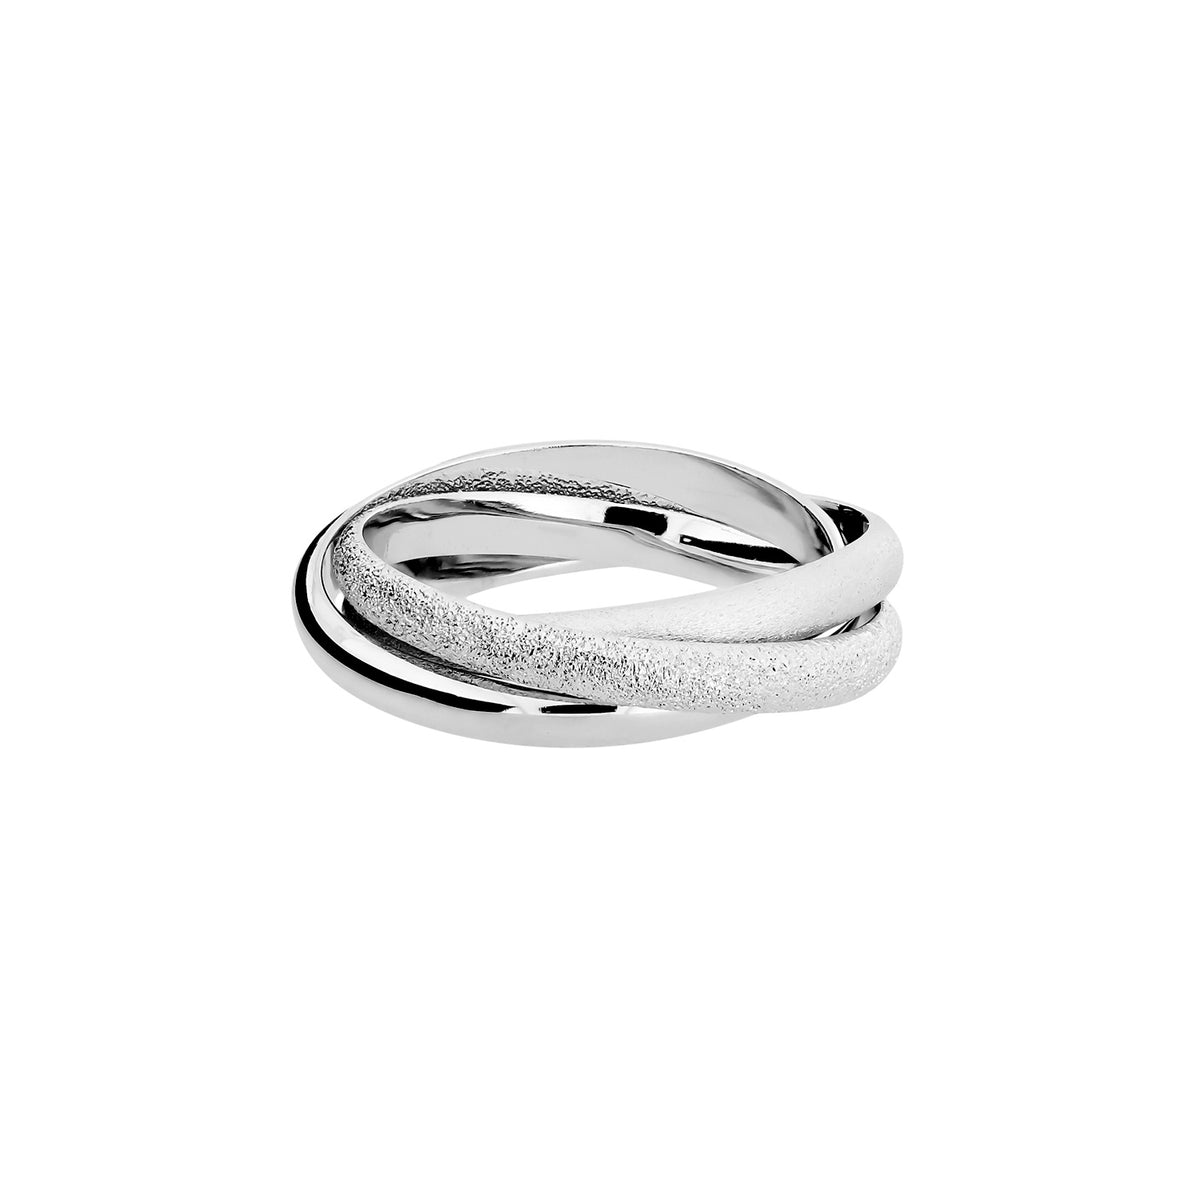 Matt &amp; Polished Silver Russian Wedding Ring